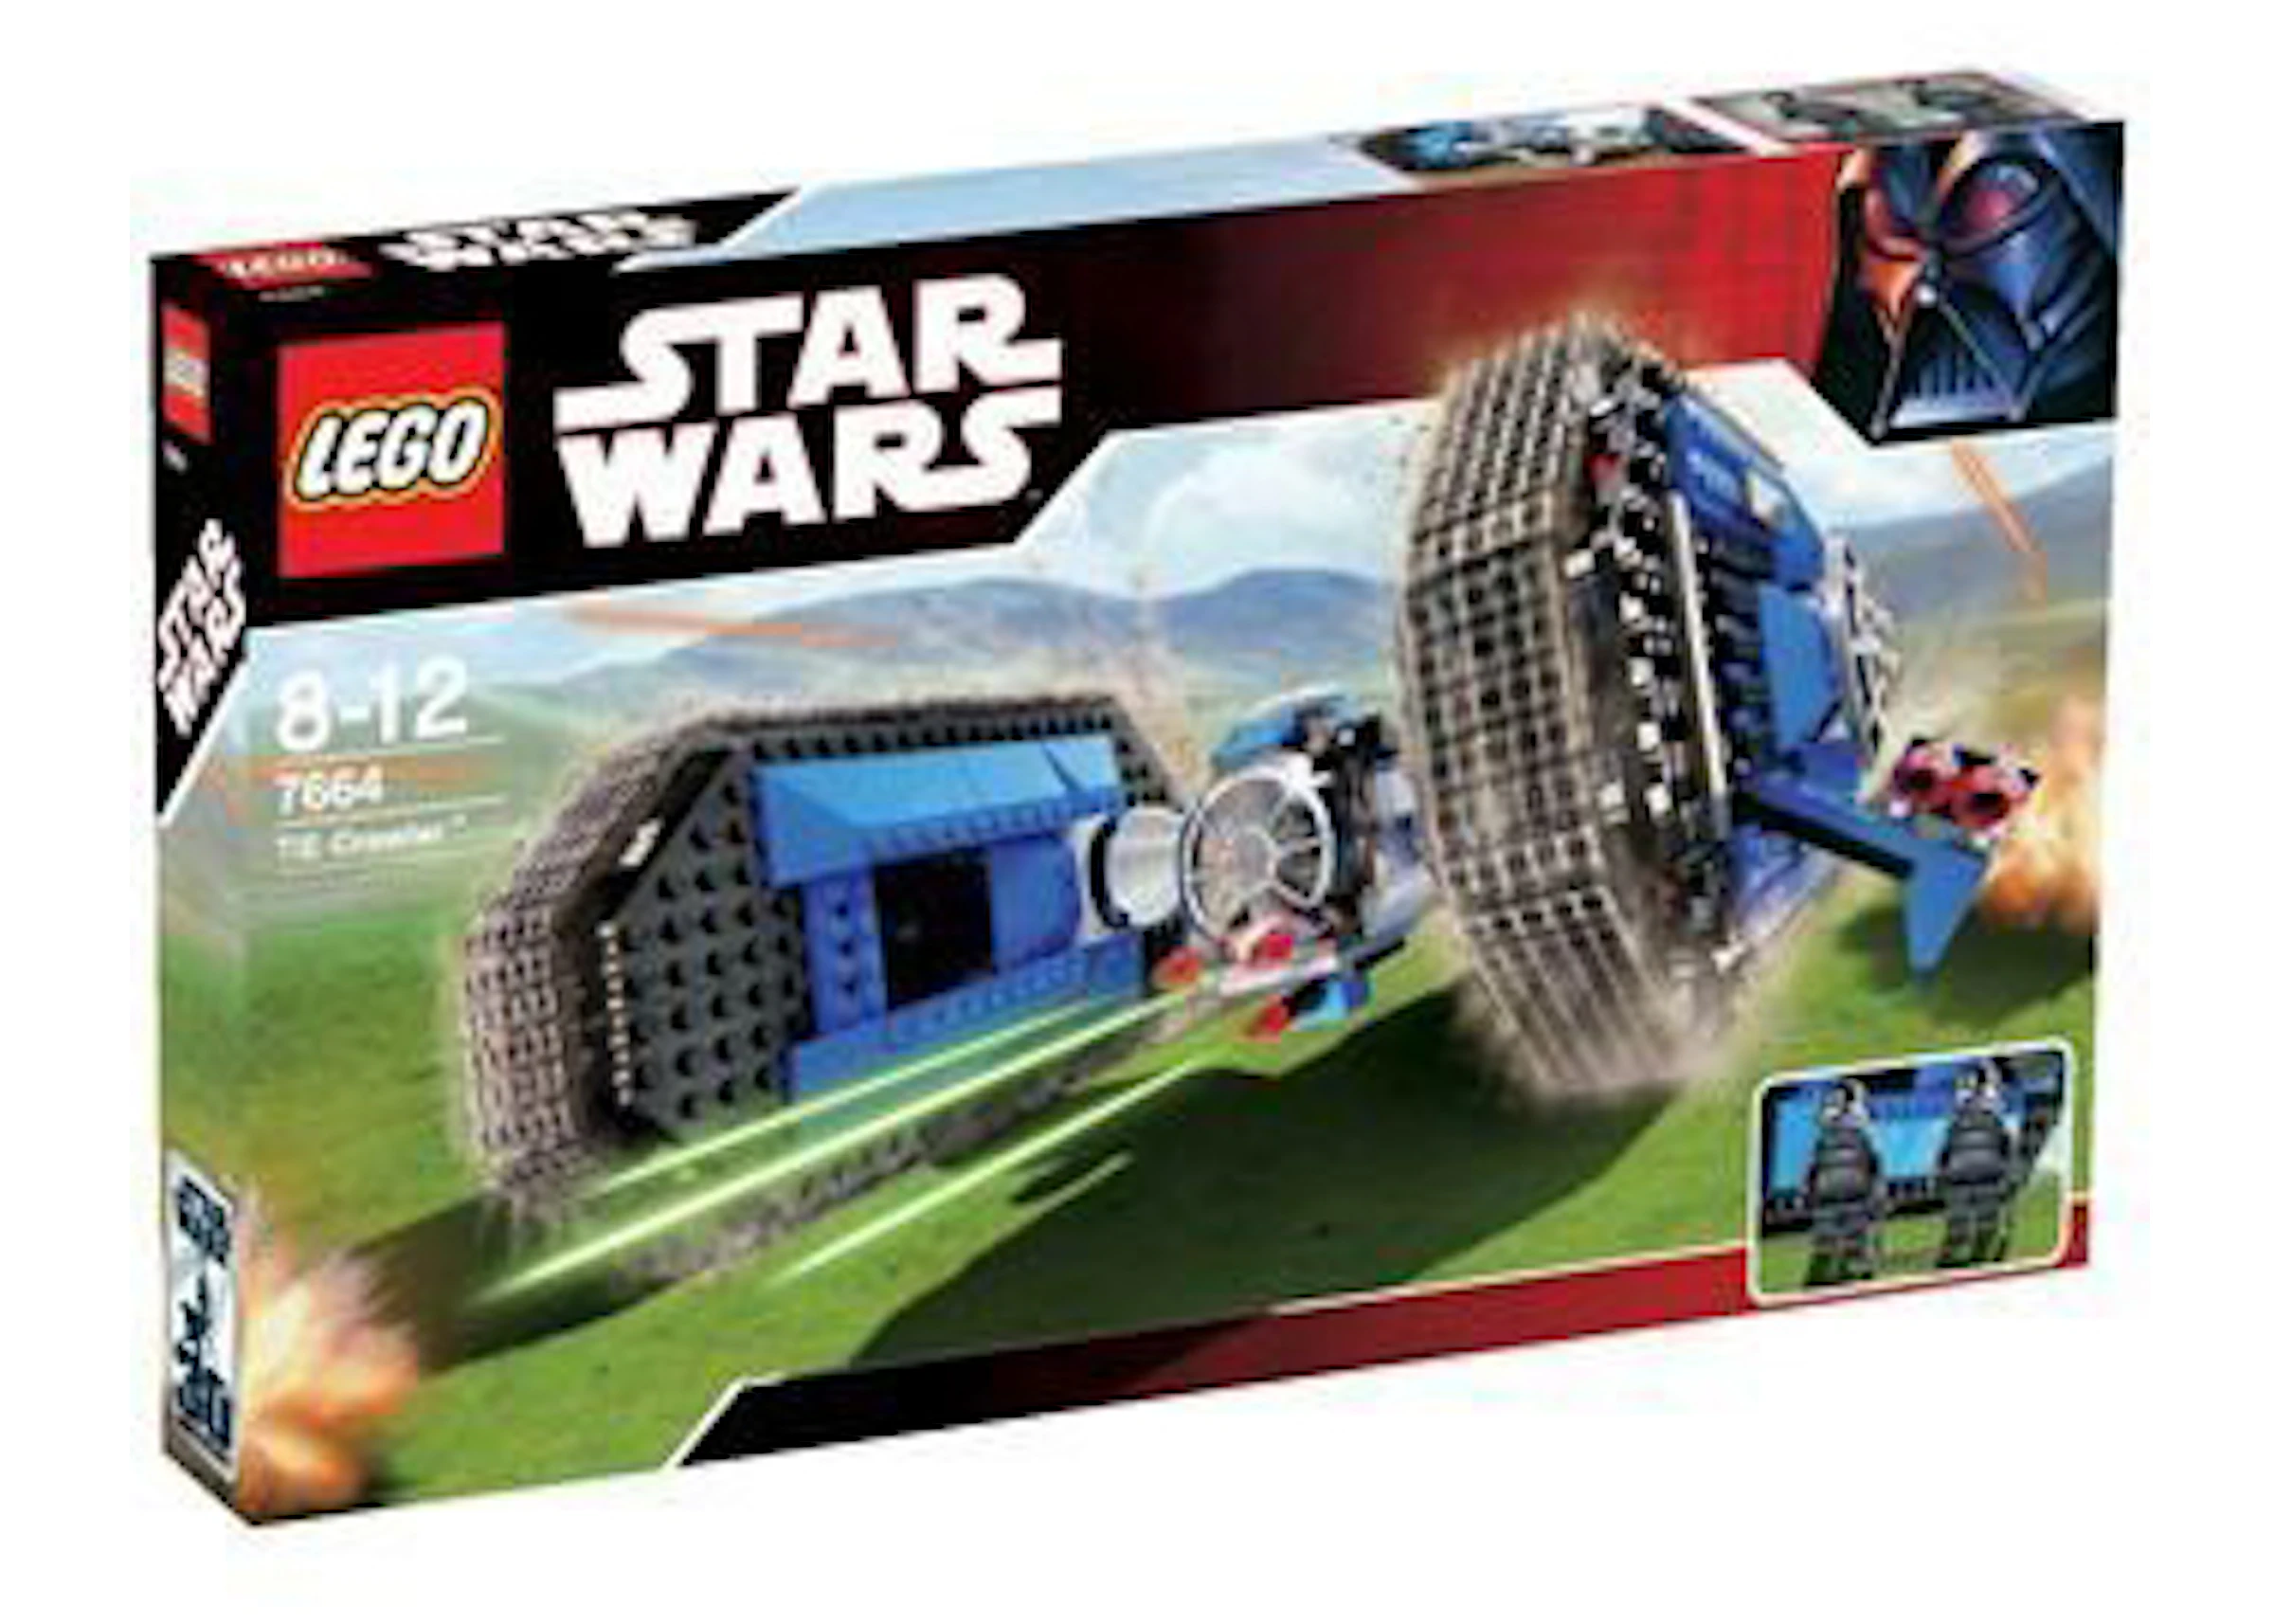 Plantation Mug Akrobatik LEGO Star Wars TIE Crawler Set 7664 Brown - SS07 - US